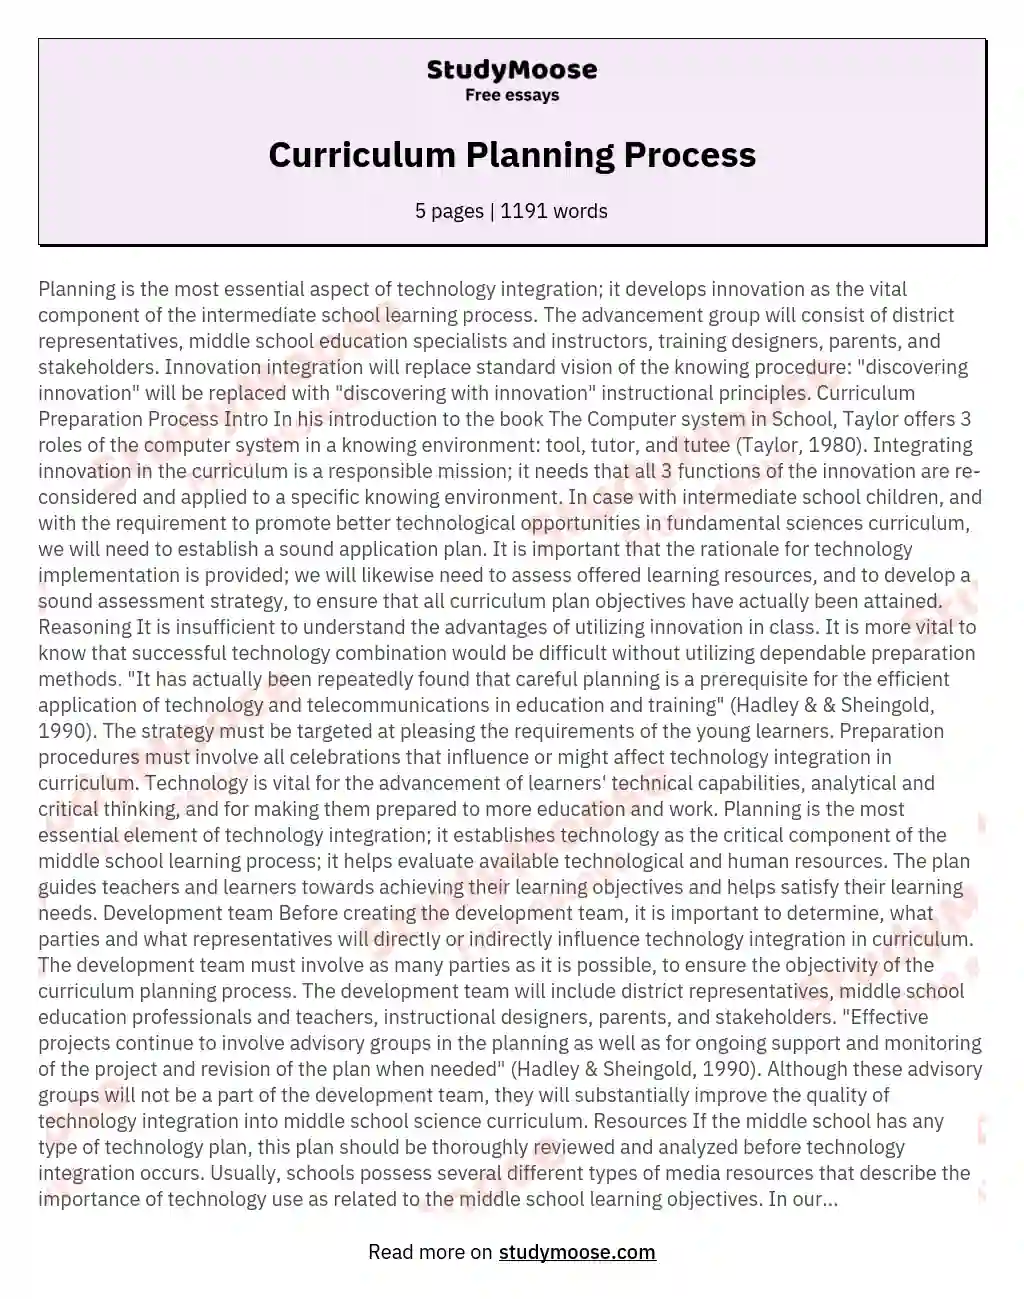 Curriculum Planning Process essay